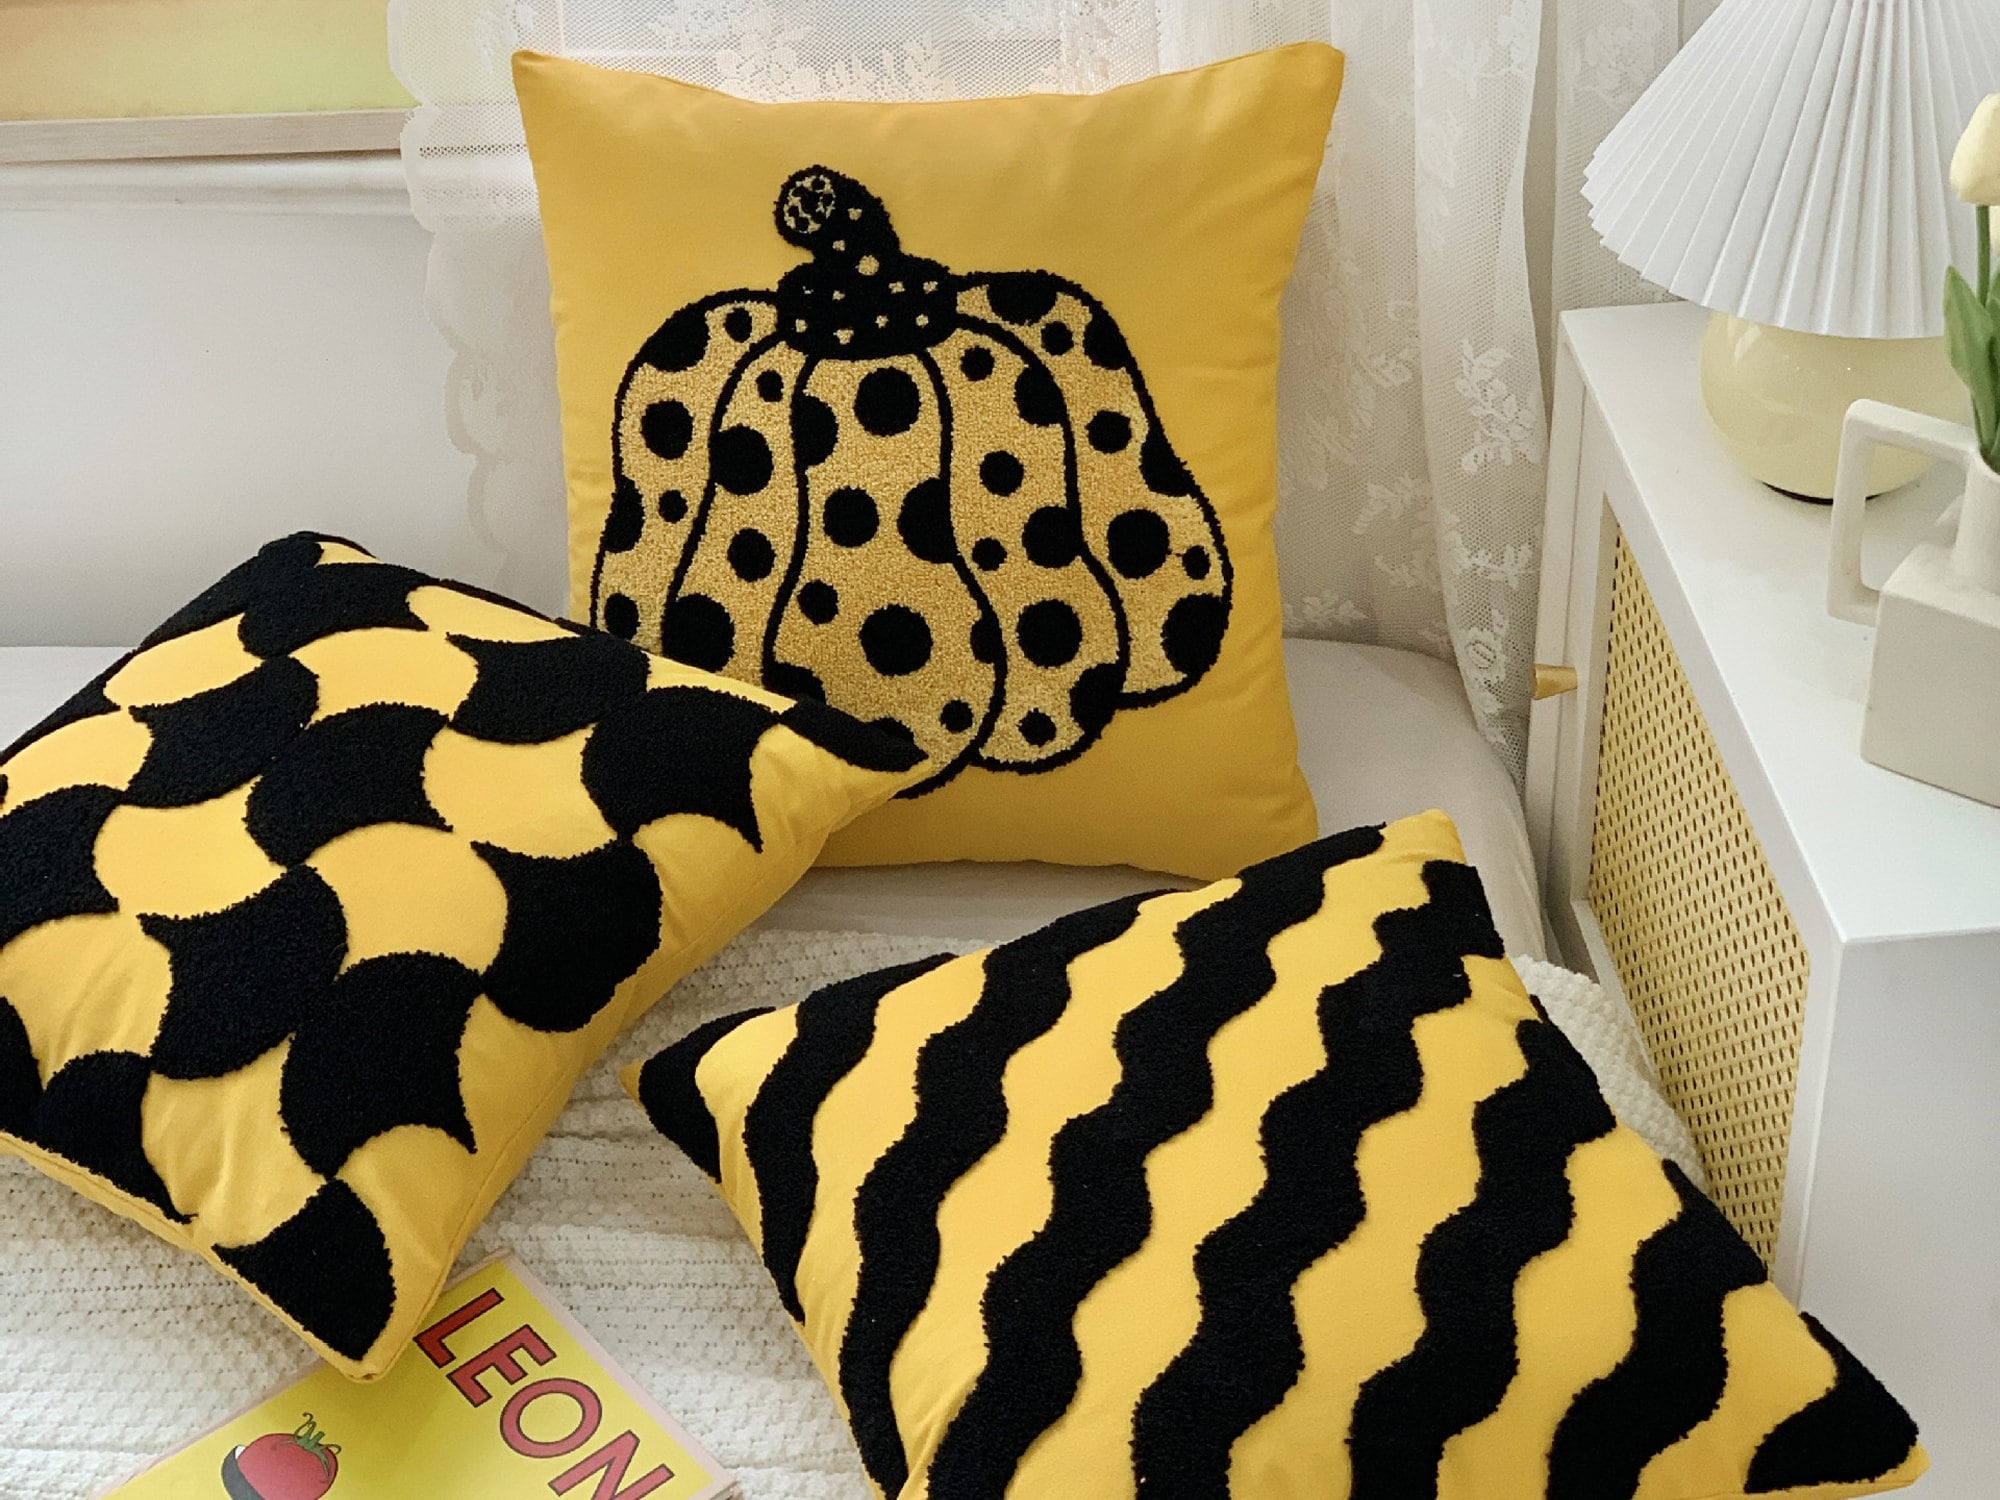 Pumpkin Trio - Decorative Pillow Cover - 18x18 inches – Cotton and Crate